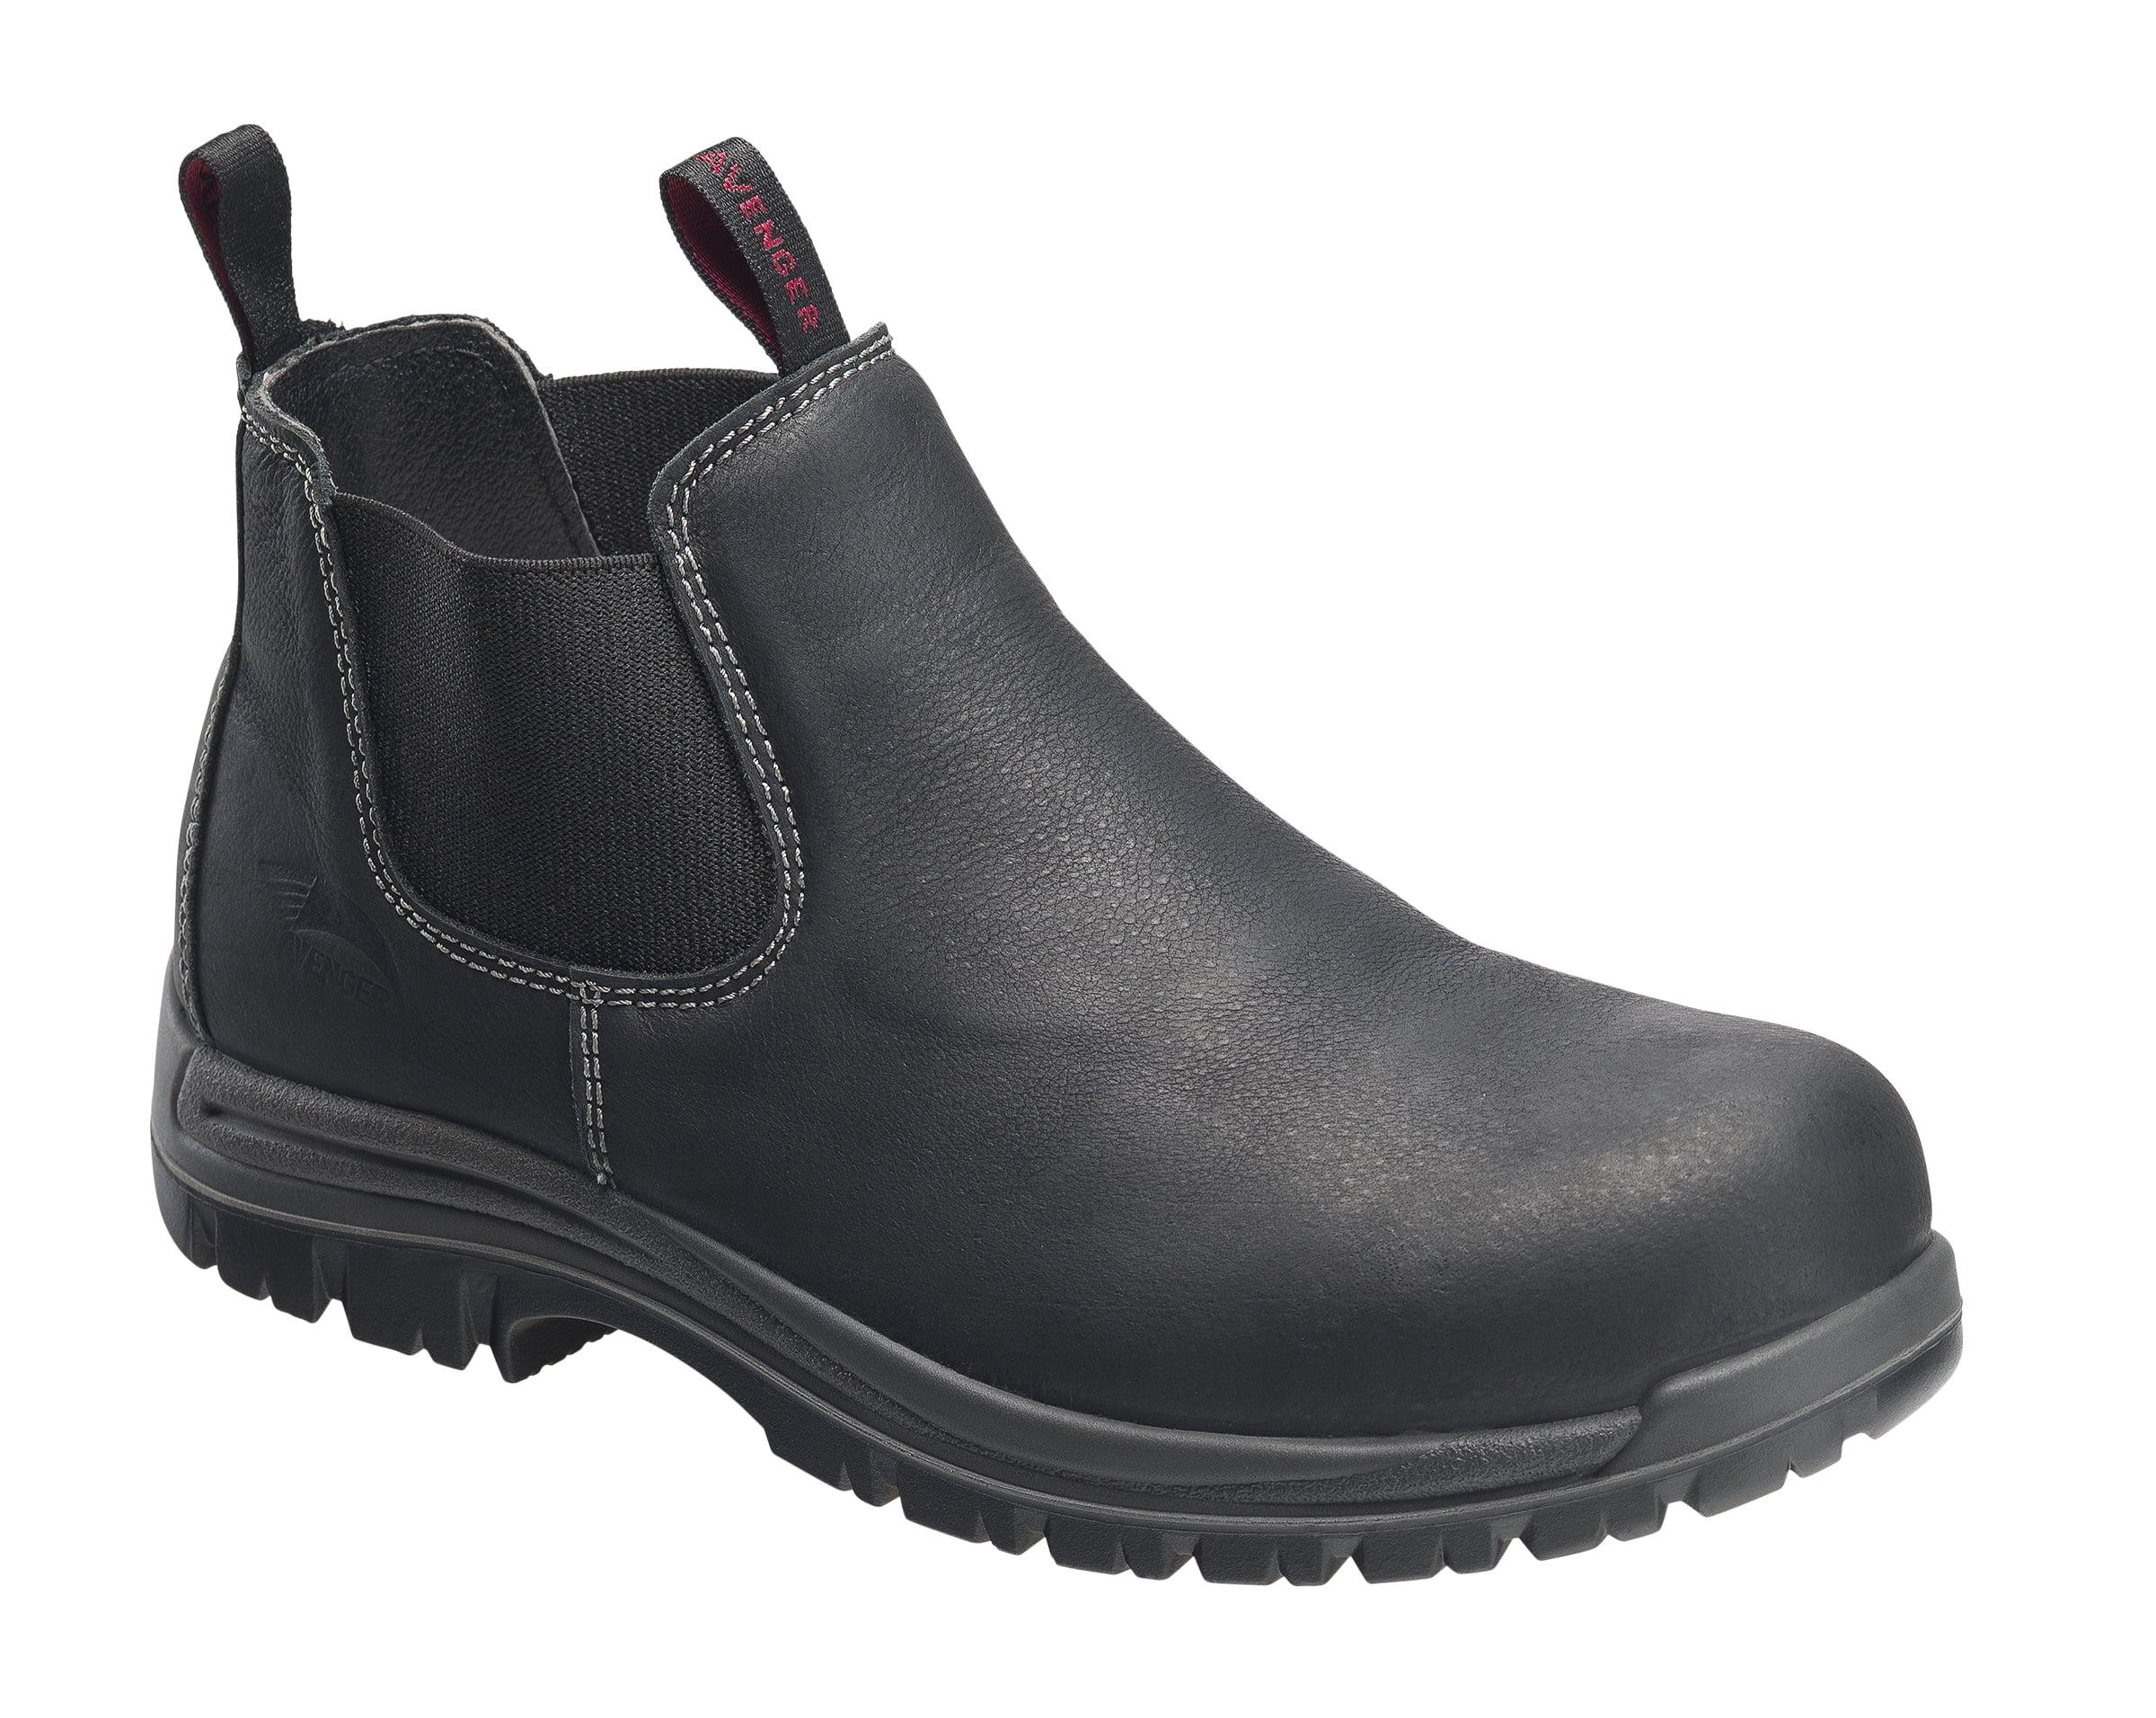 stylish black work boots